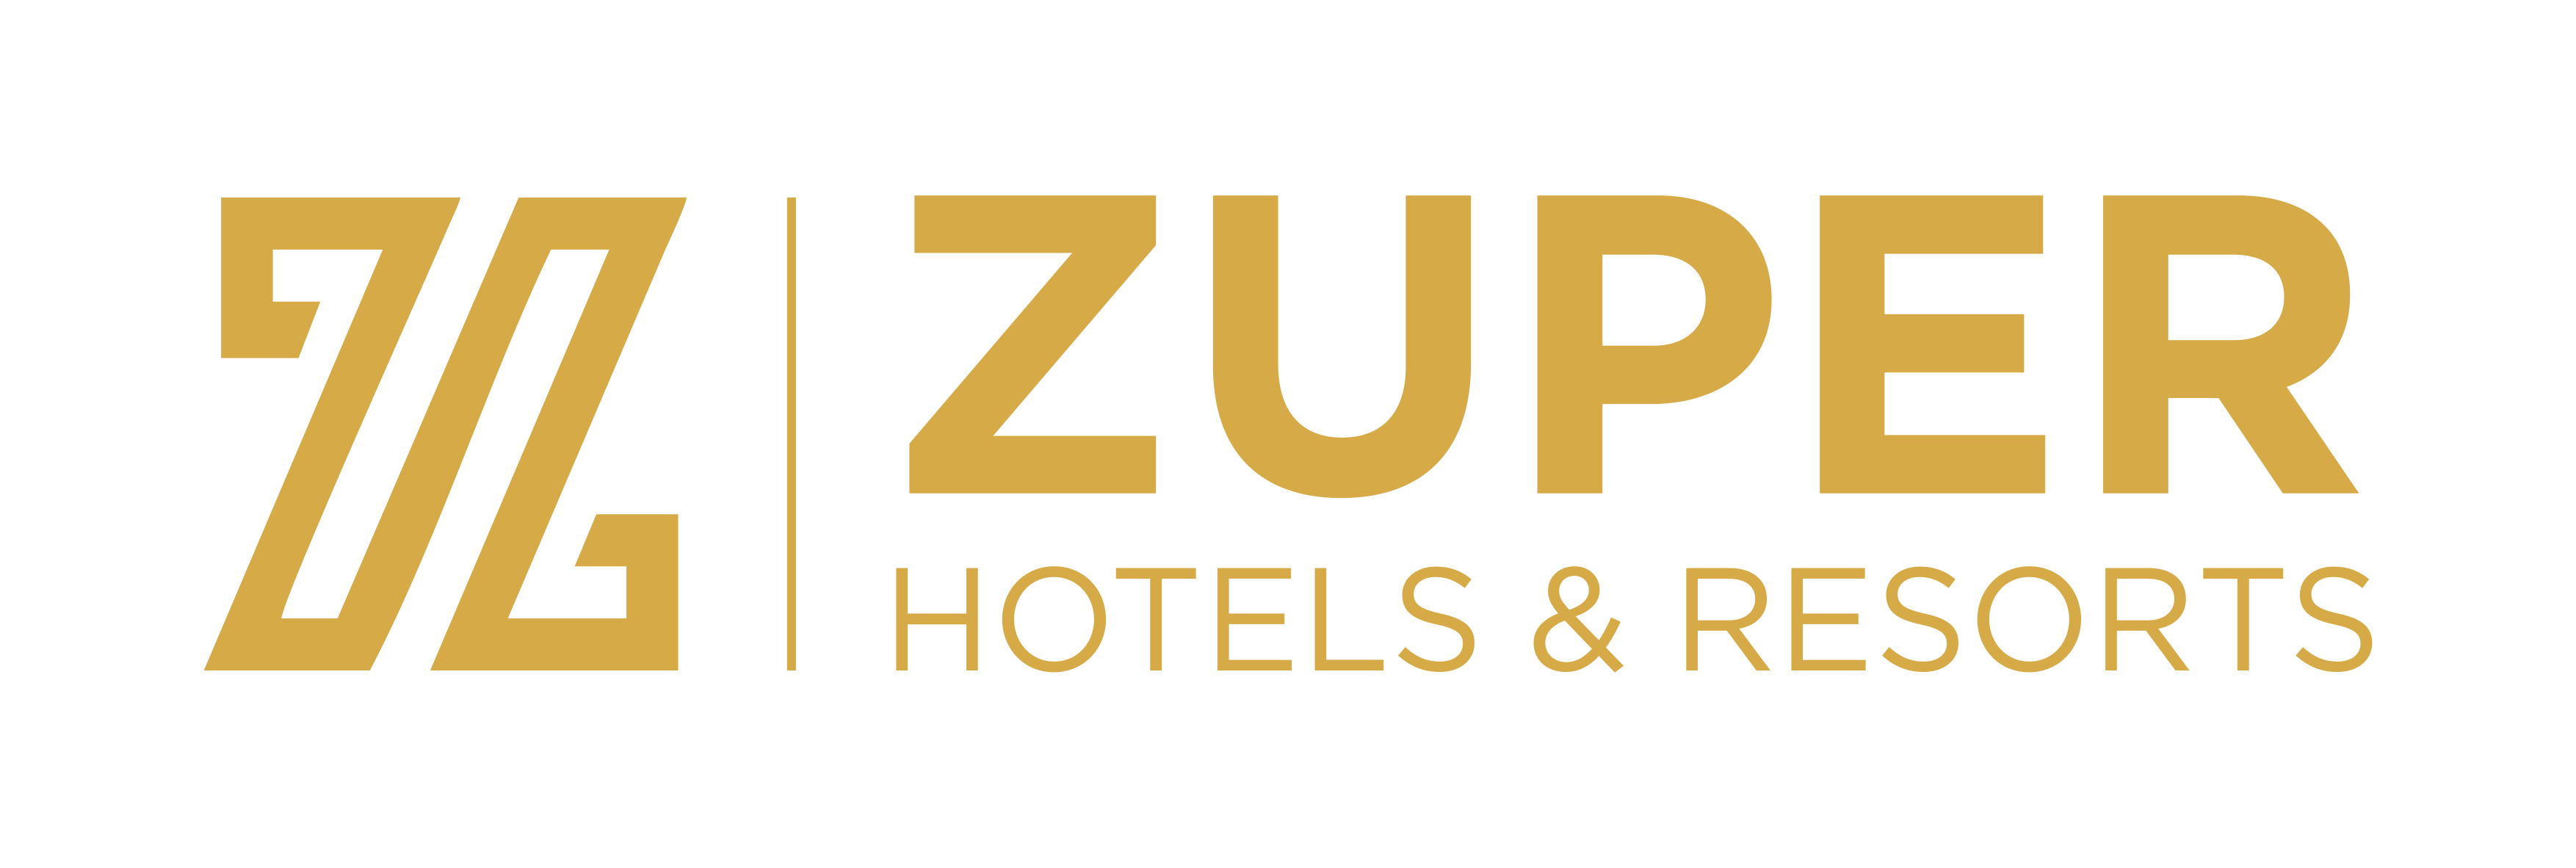 Best Hotel & Resort Management Company in Mumbai - Zuper Hotels & Resorts